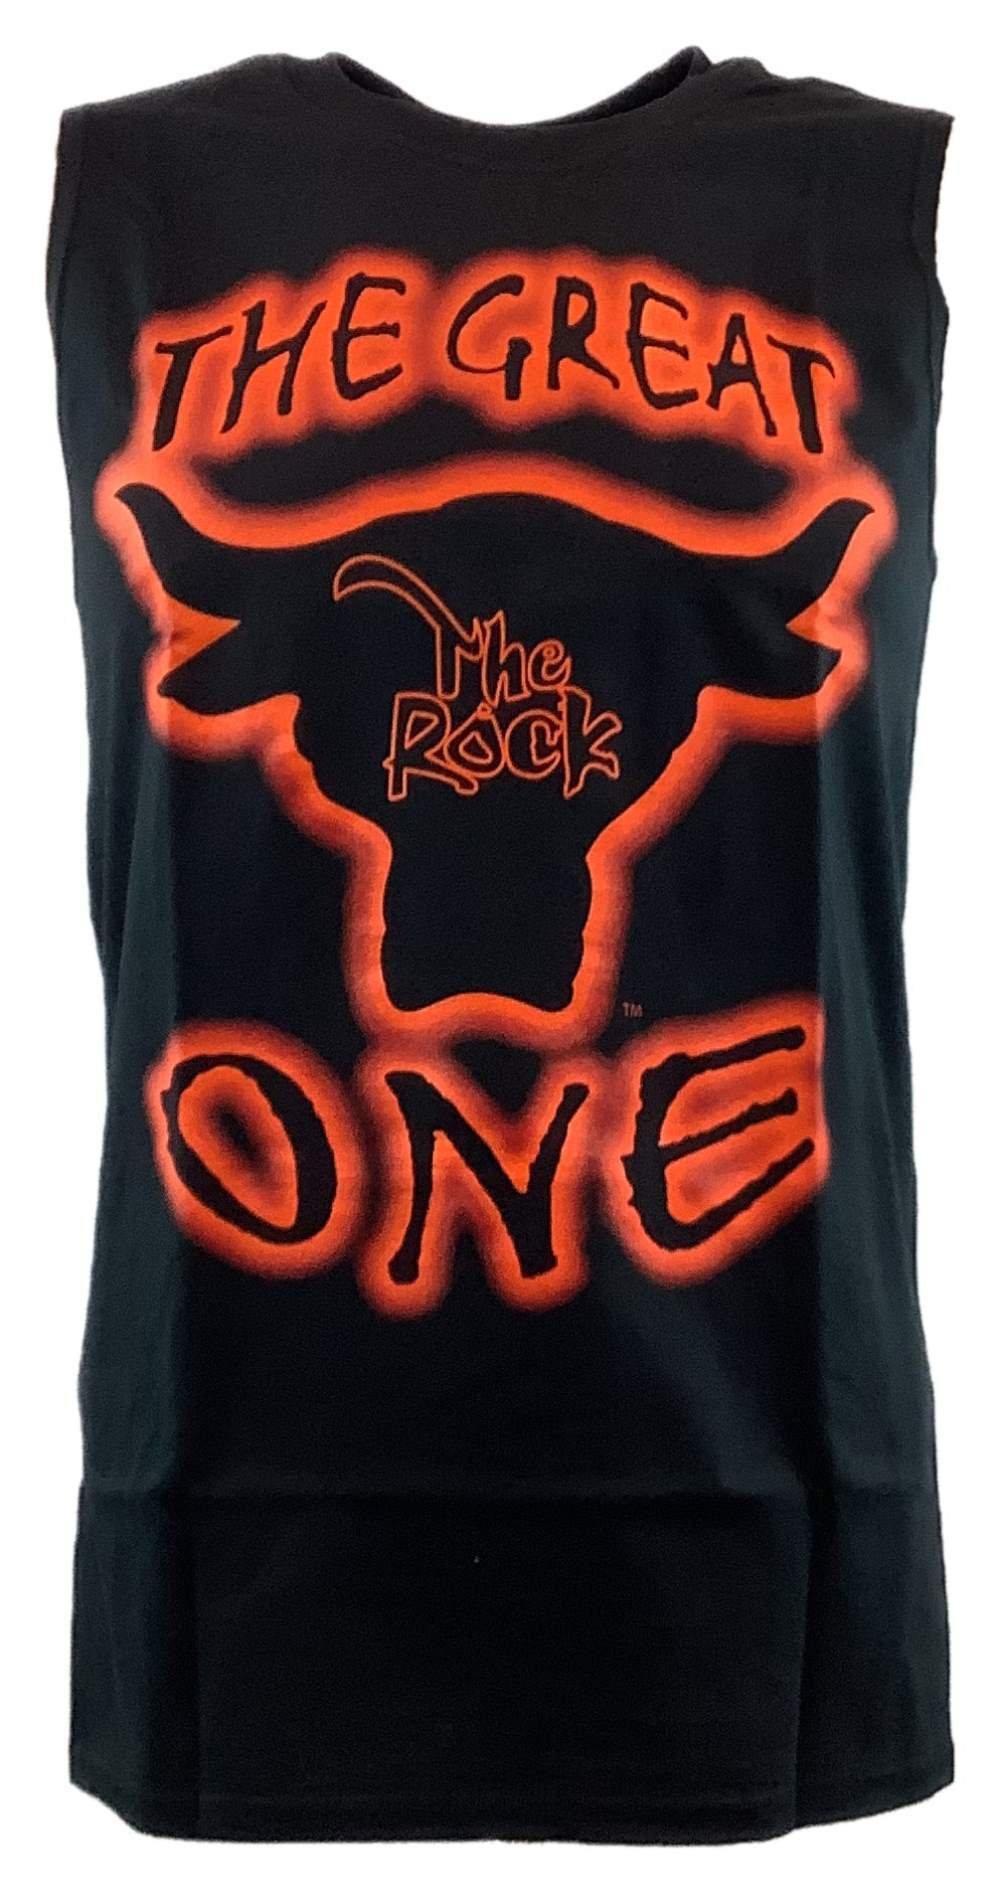 Buy WWE The Rock Brahma Bull Authentic T-Shirt Black/White XL at